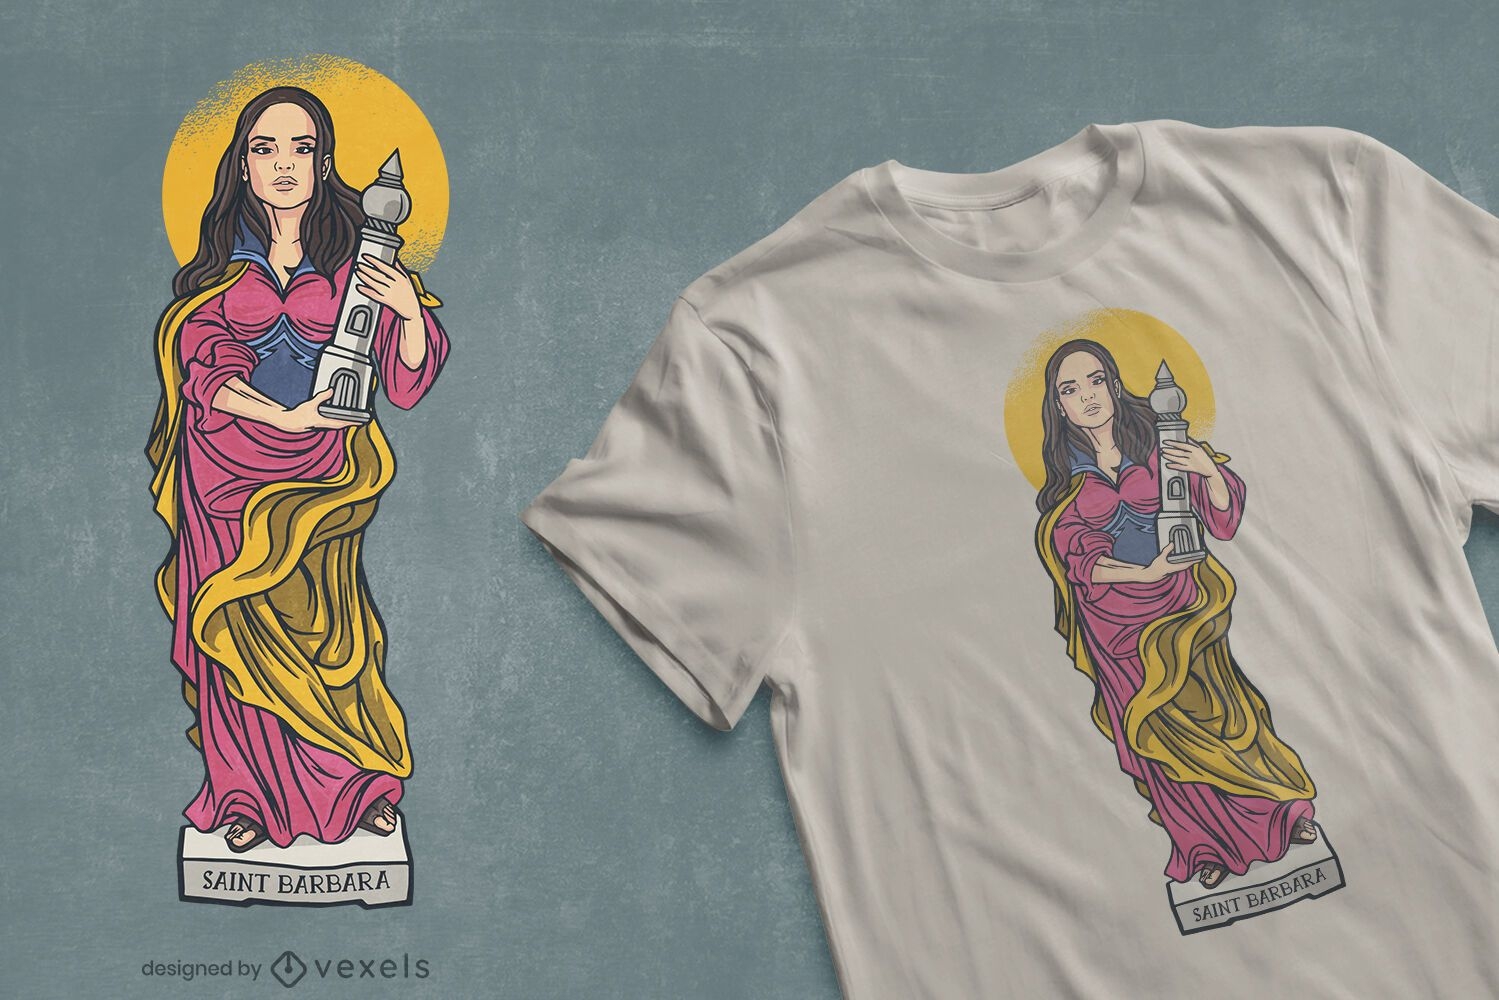 Saint Barbara t-shirt design